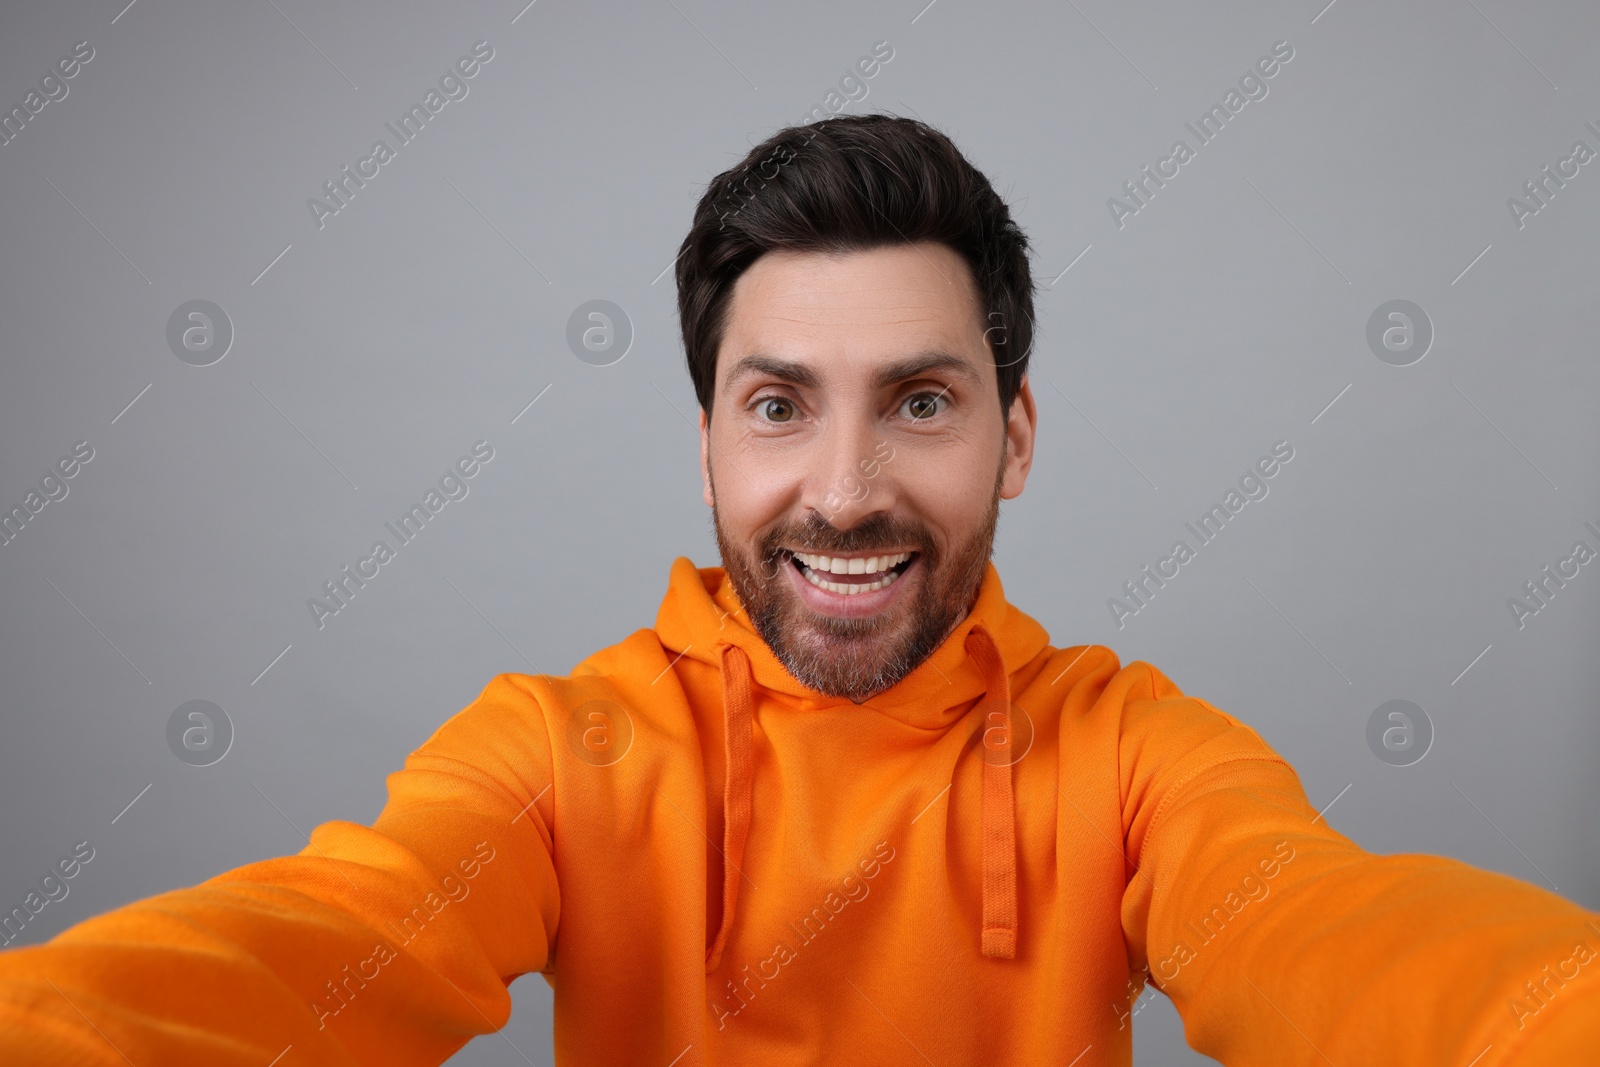 Photo of Smiling man taking selfie on grey background